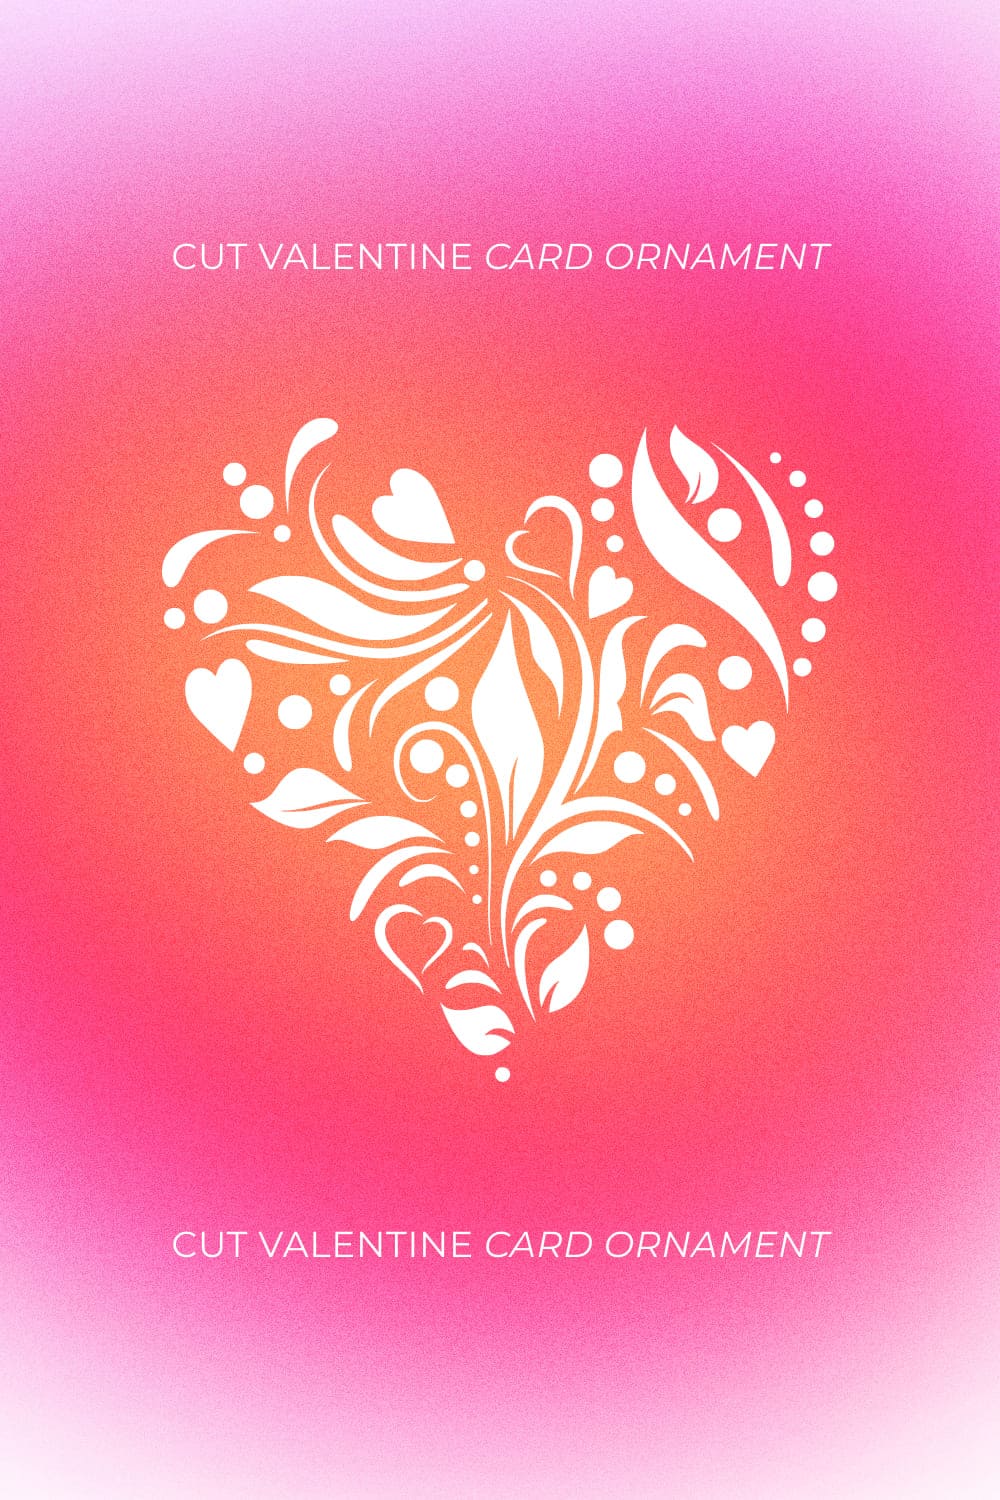 Cut Valentine Card Ornament - Pinterest Image.